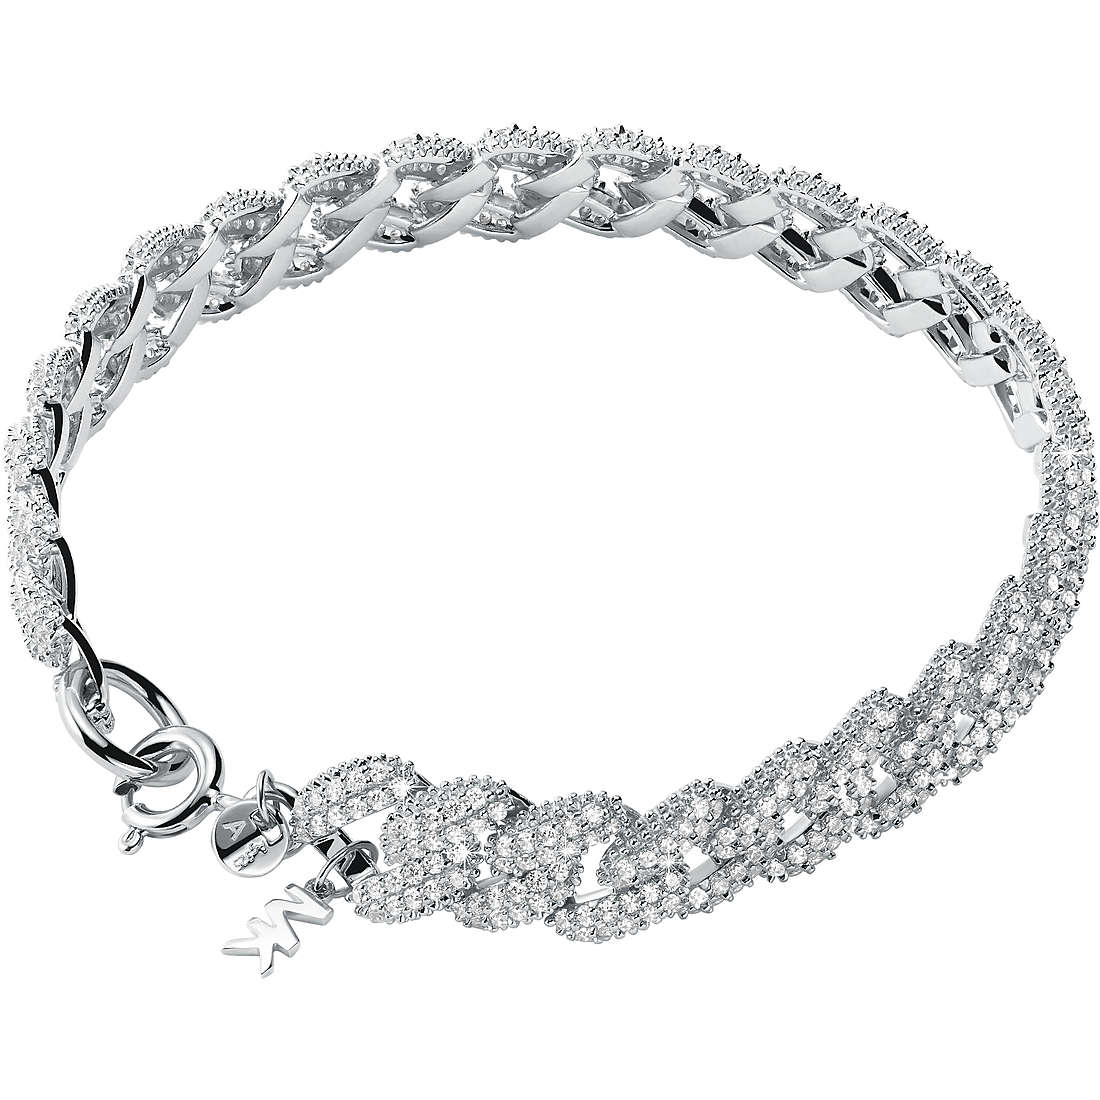 bracelet woman jewellery Michael Kors MKC1427AN040